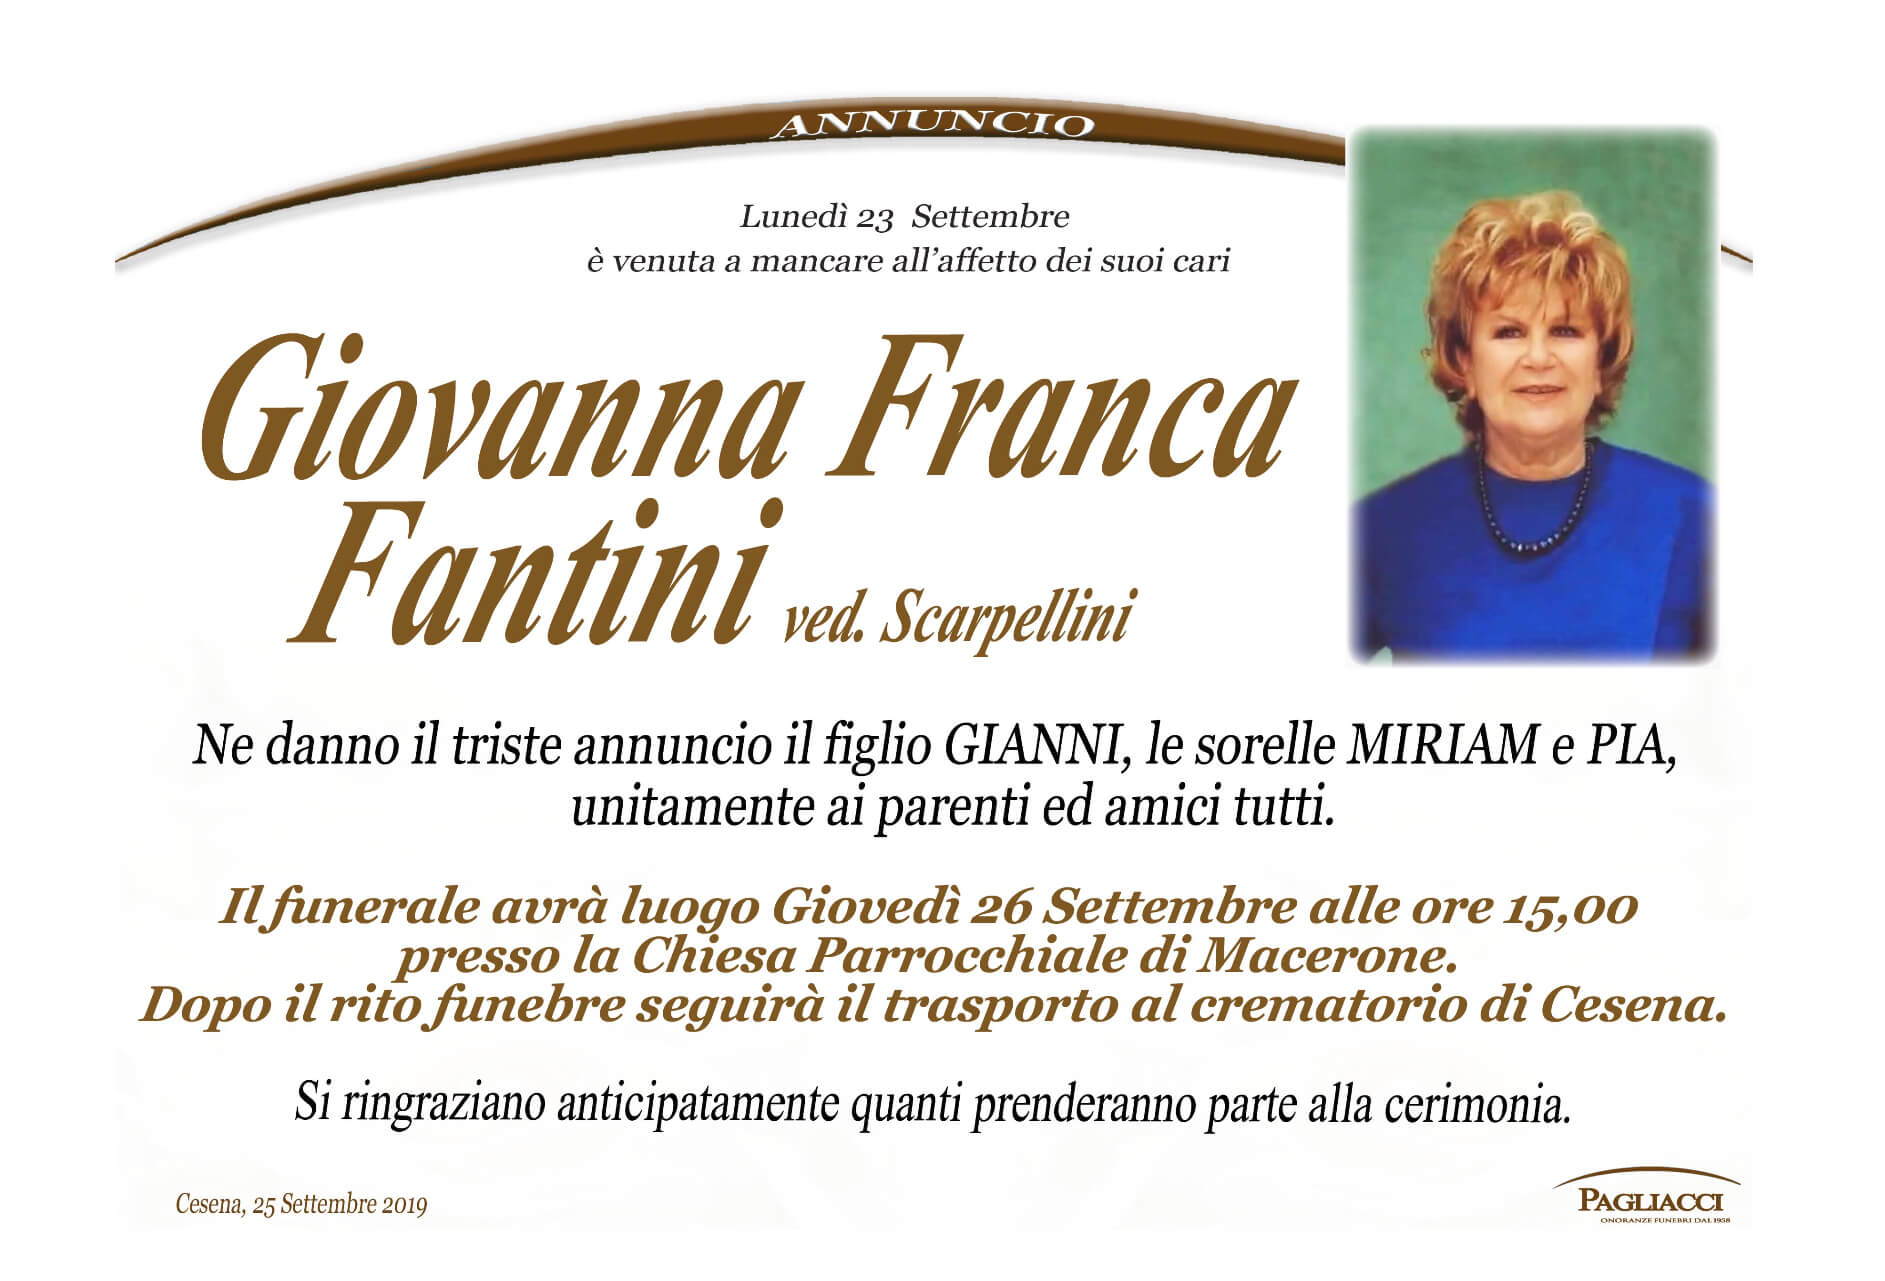 Giovanna Franca Fantini